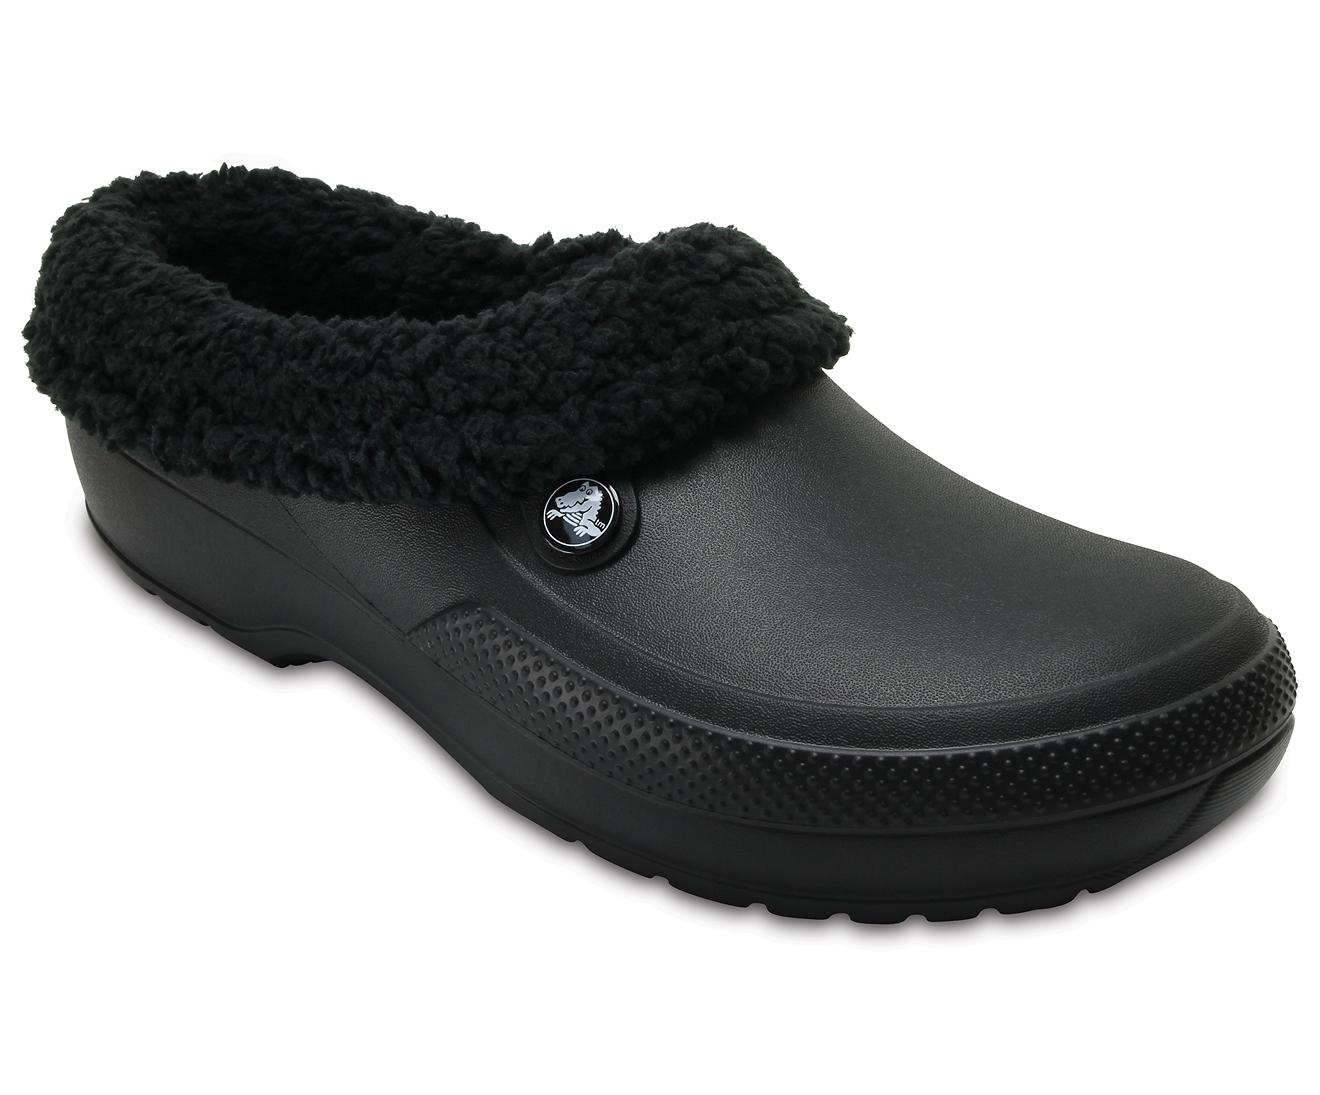 Crocs™ Blitzen Iii Clog in Black/Black (Black) - Save 46% | Lyst